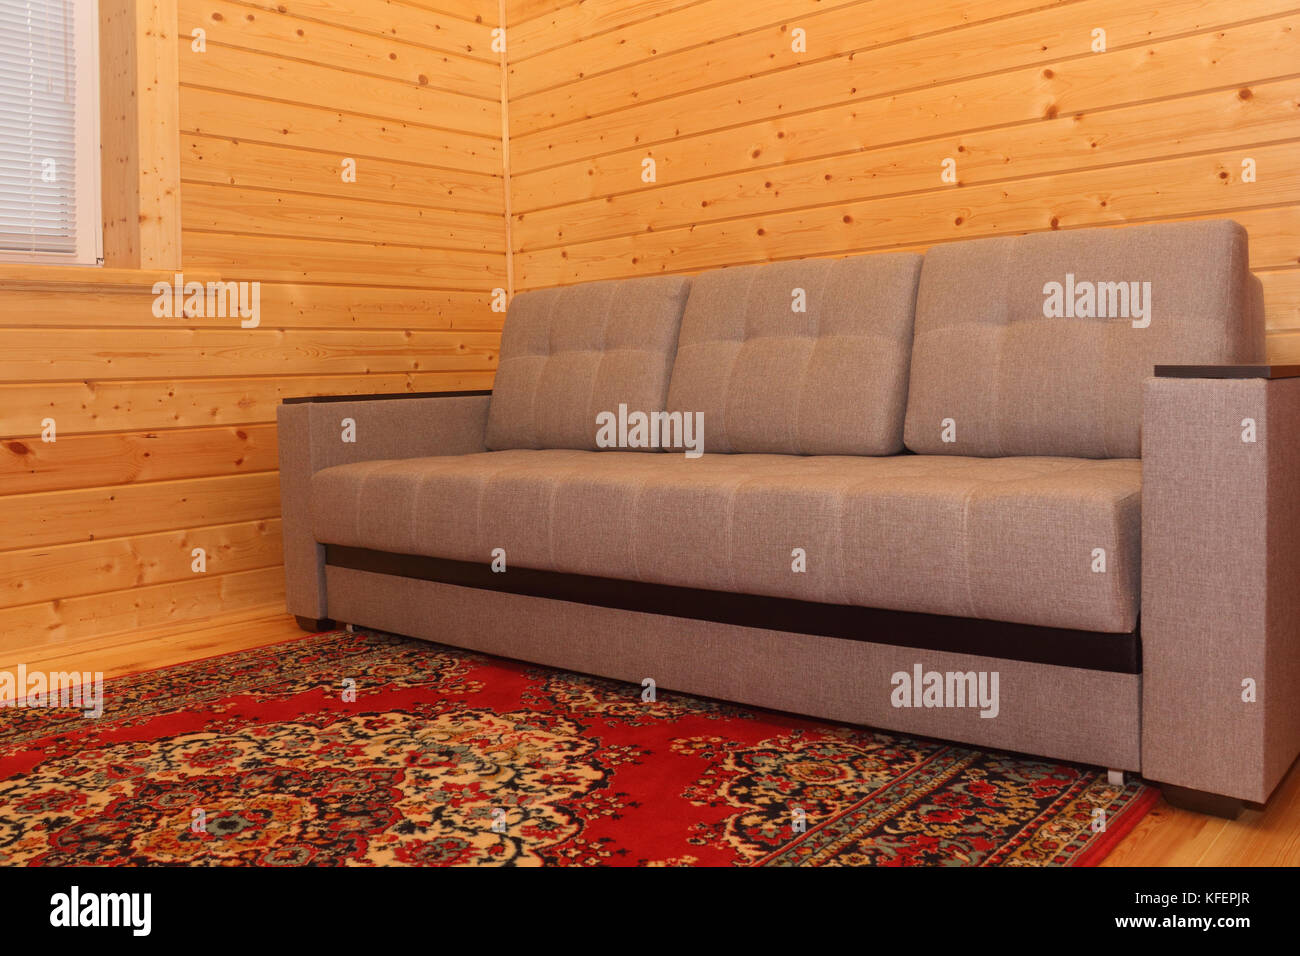 Wooden house interior - sofa and carpet photo Stock Photo